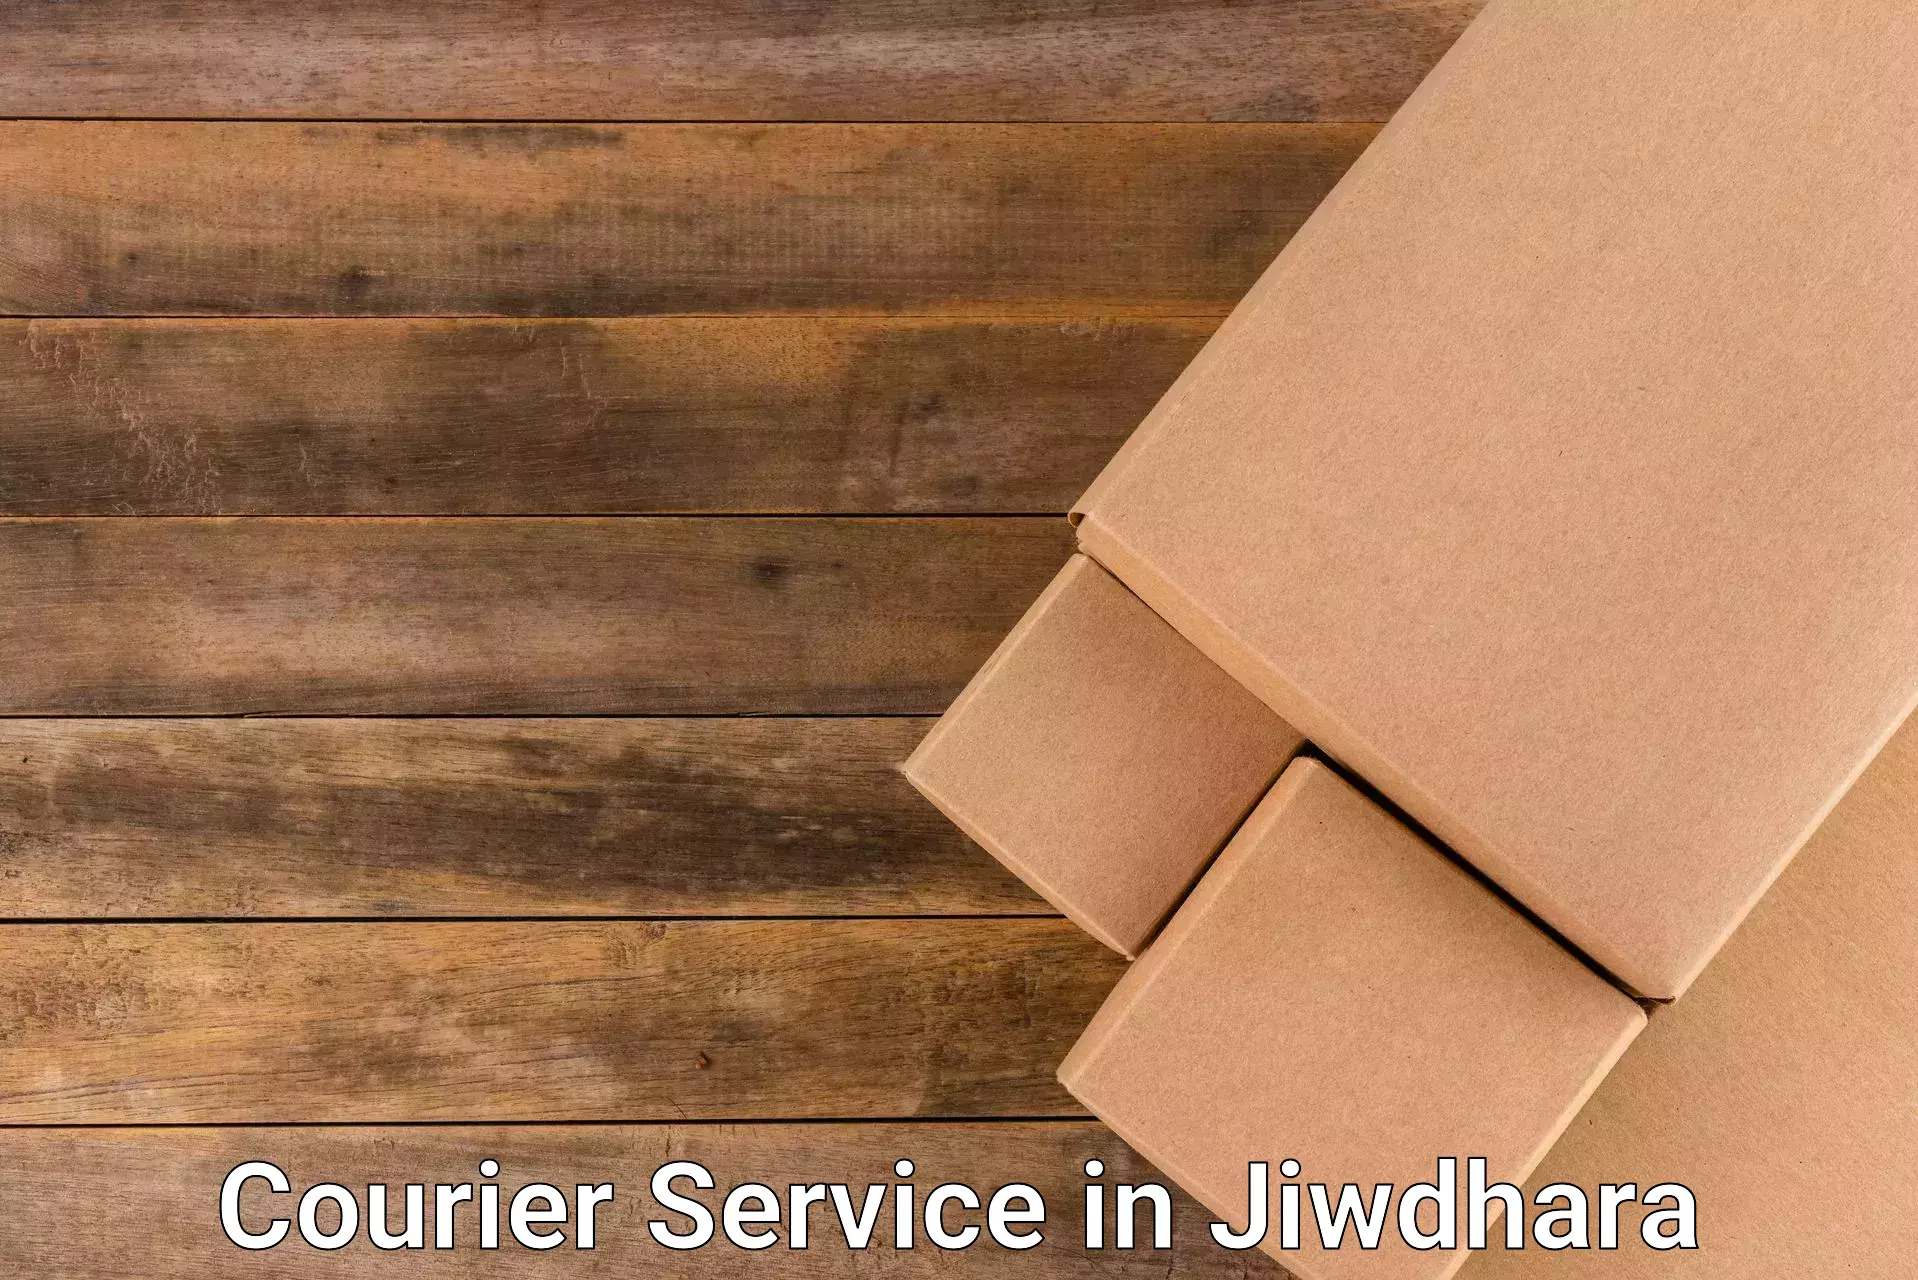 High-capacity shipping options in Jiwdhara